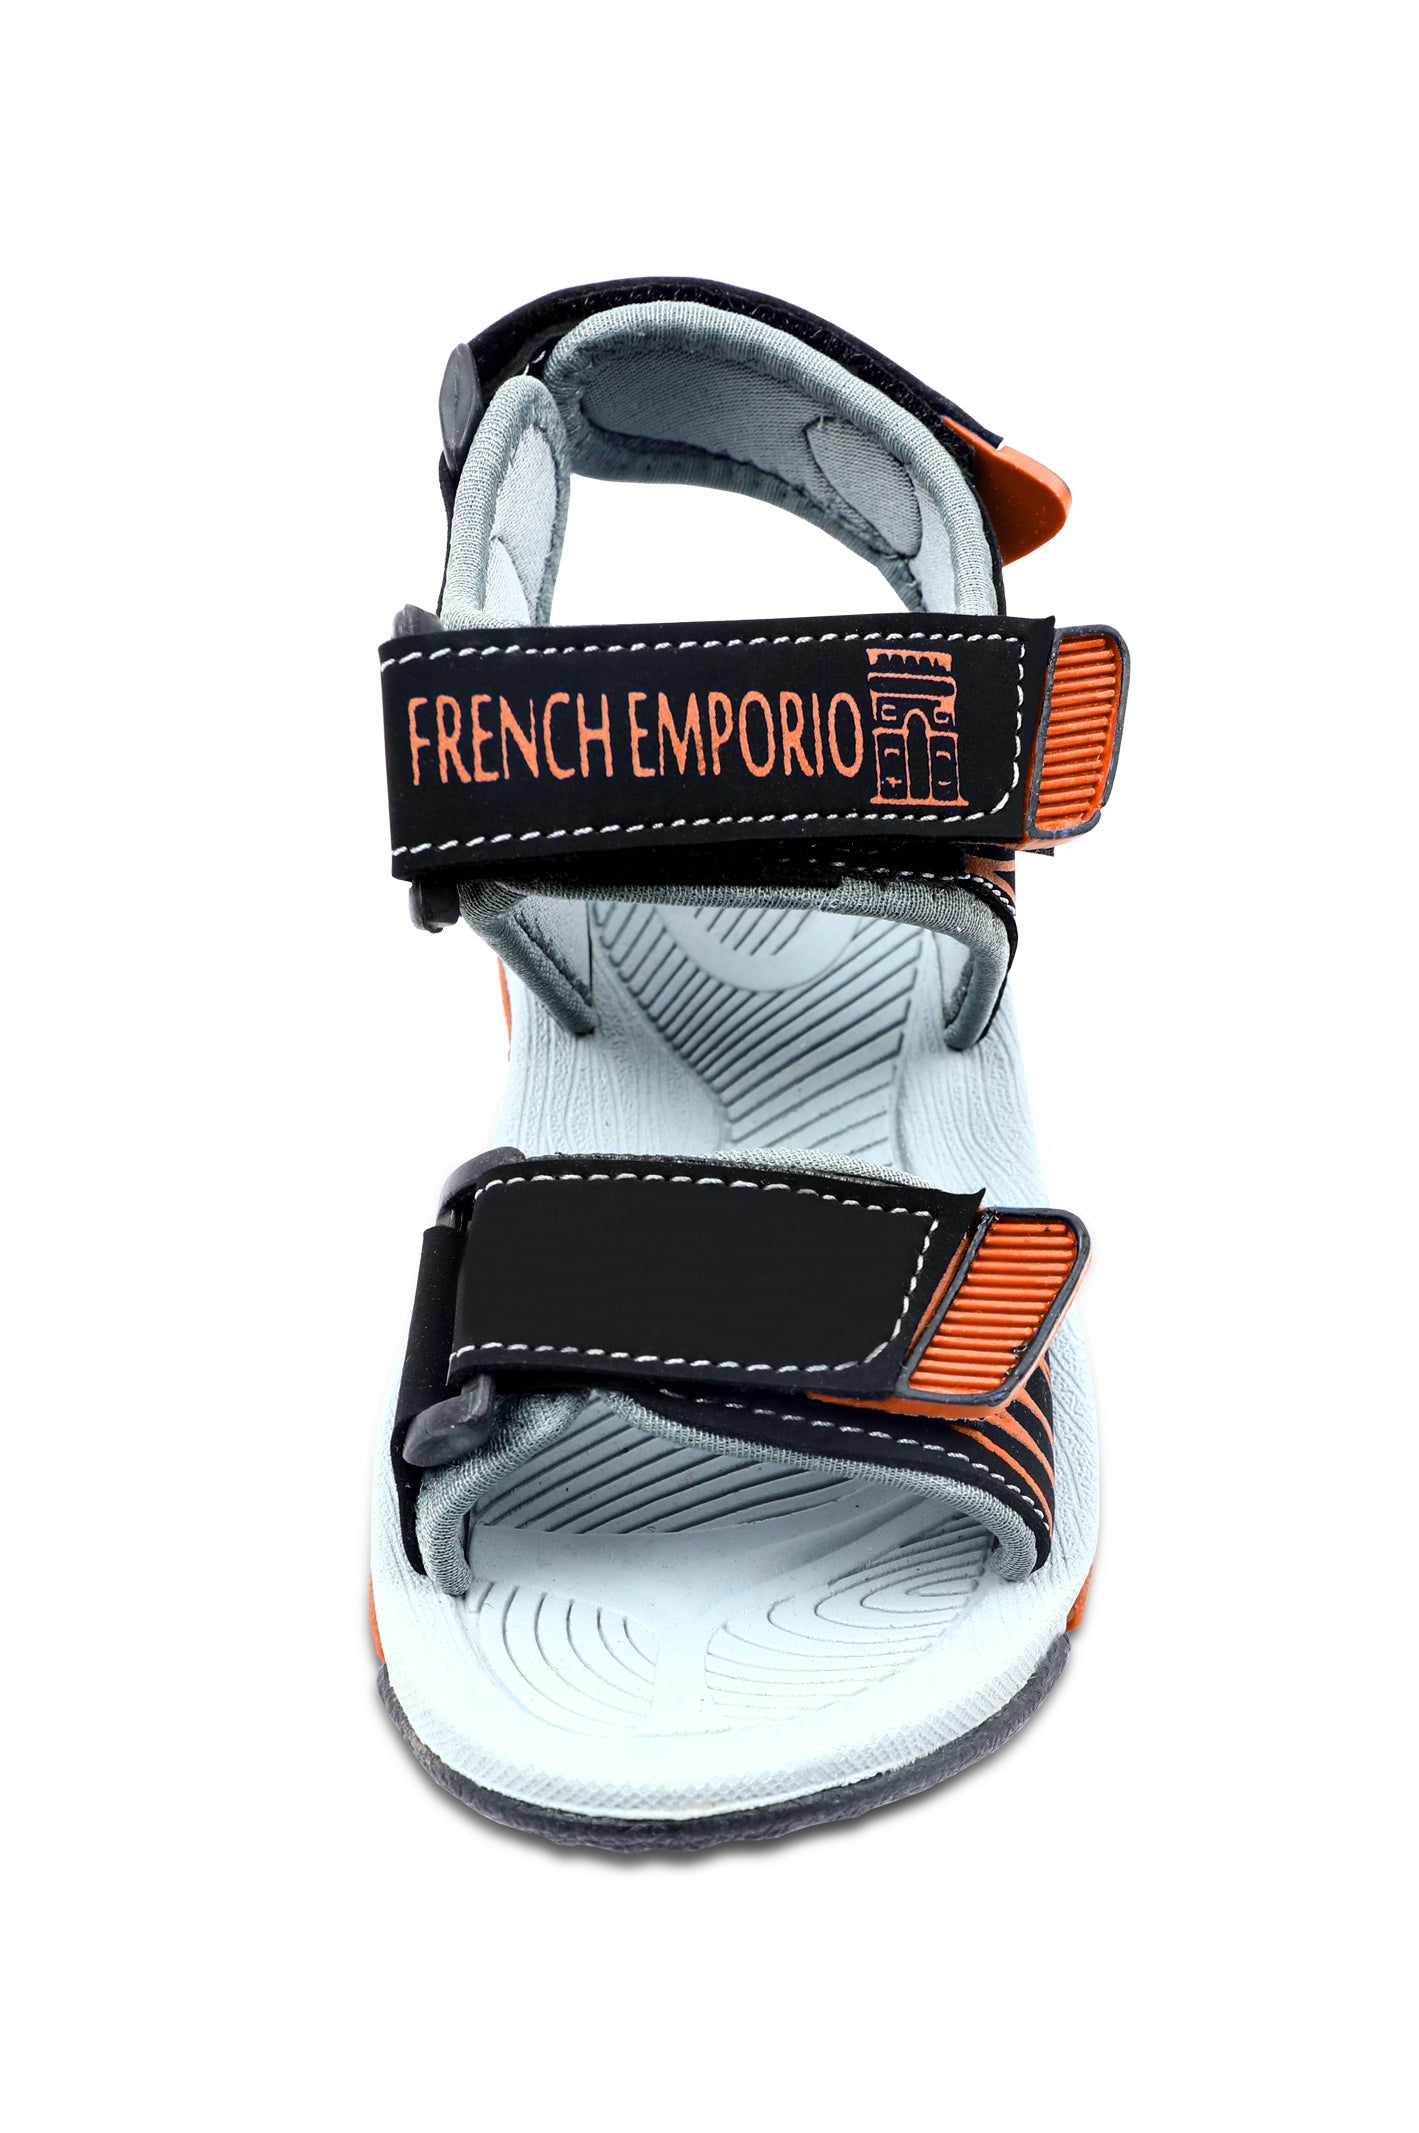 French Emporio Boys Sandals SKU: BSD-0001-ORANGE - Diners